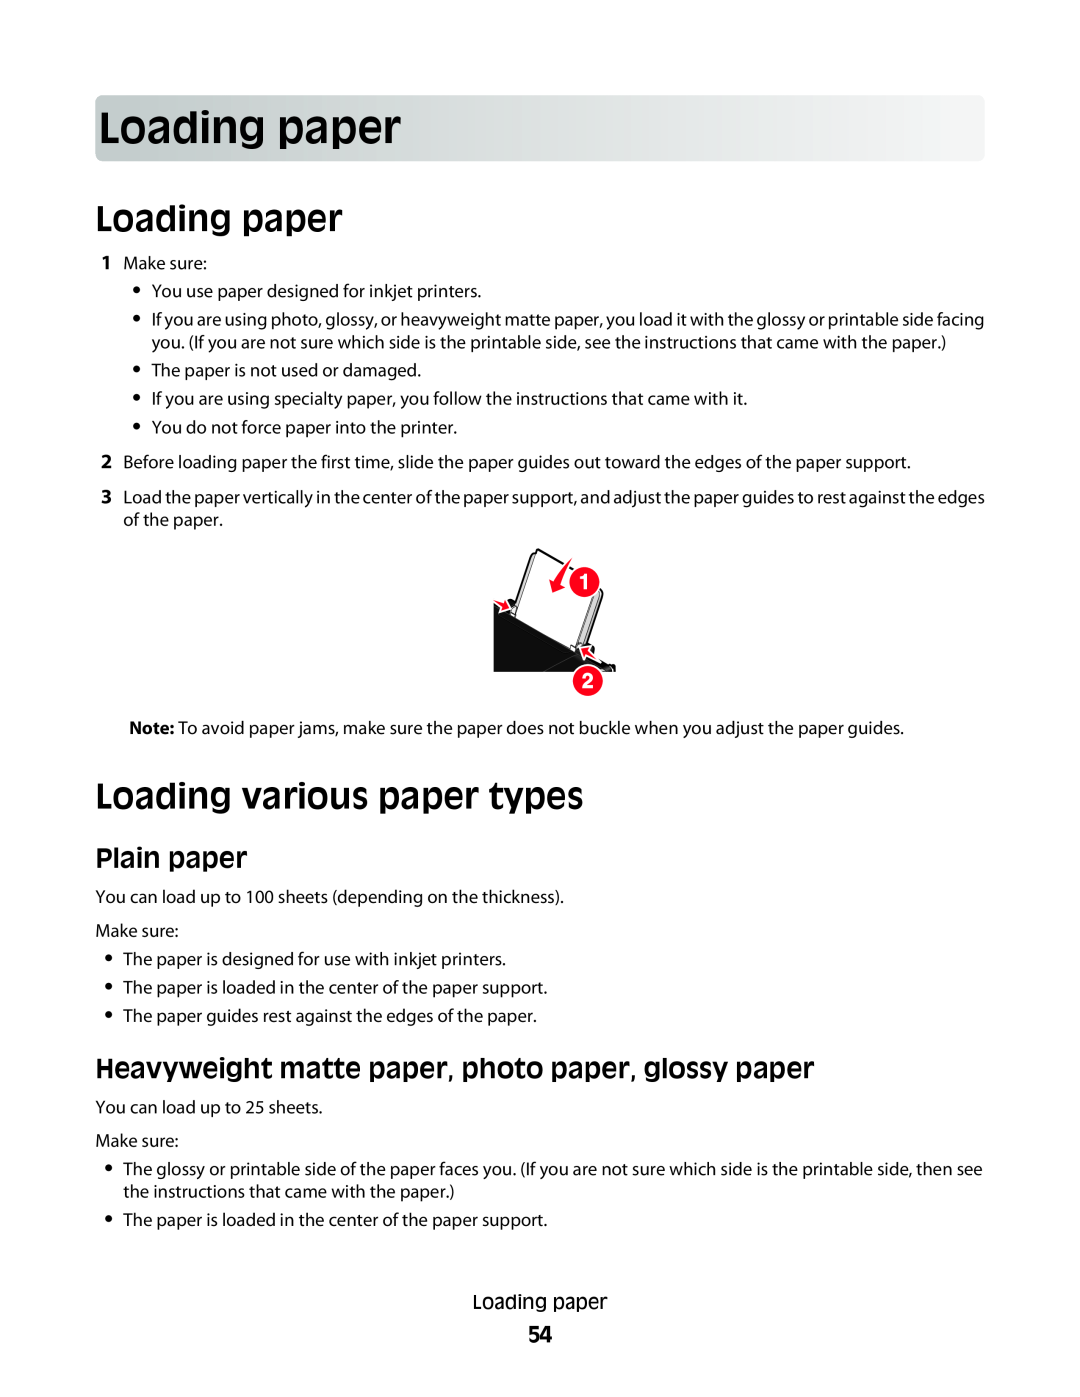 Lexmark 4600, 3600 manual Loadin g paper, Loading paper, Loading various paper types, Plain paper 